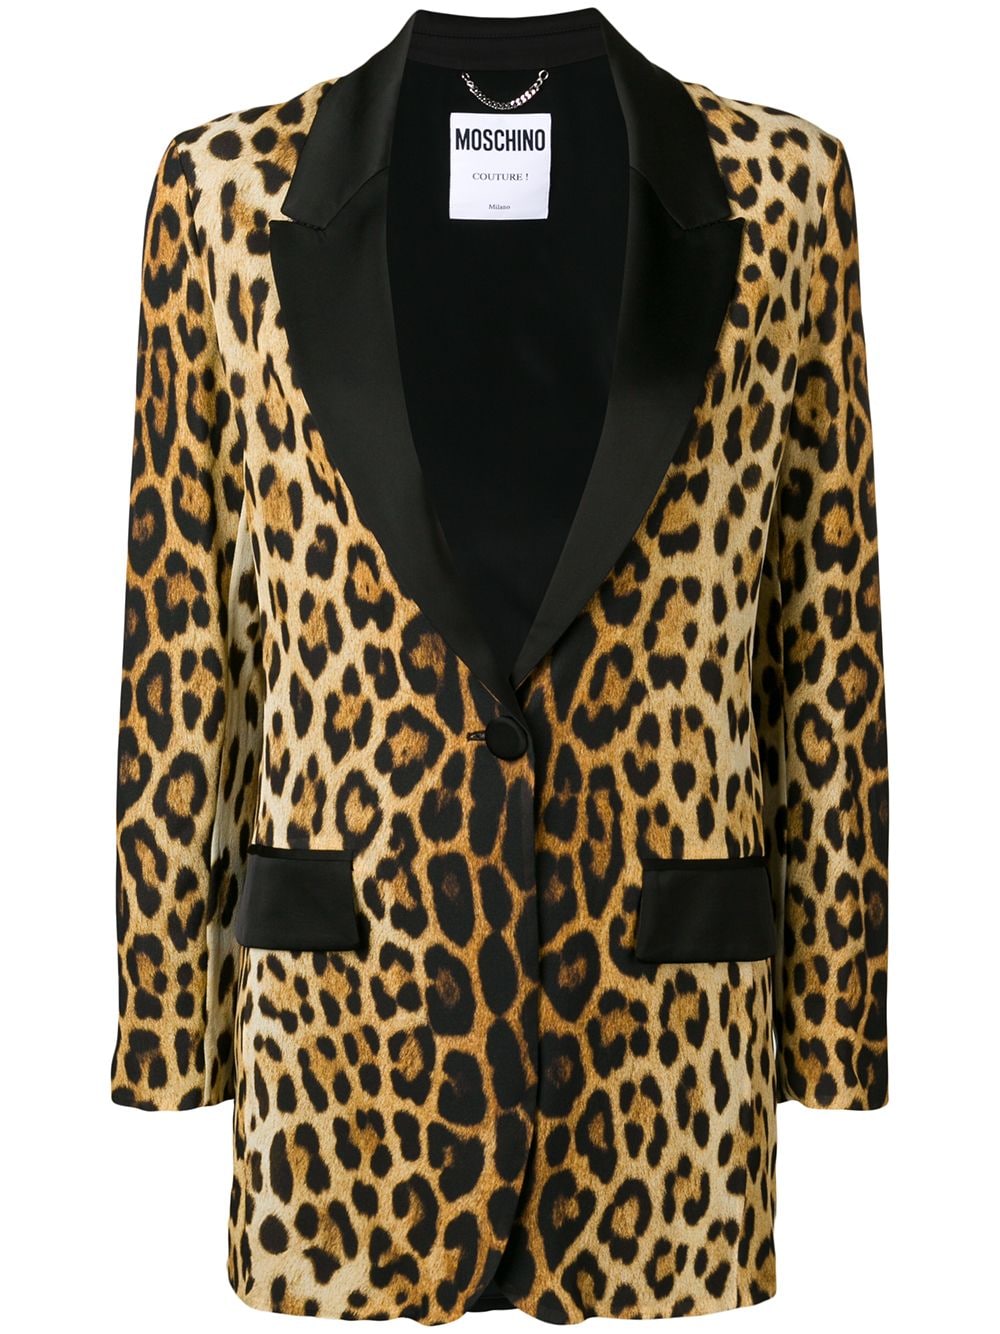 Moschino leopard print blazer 